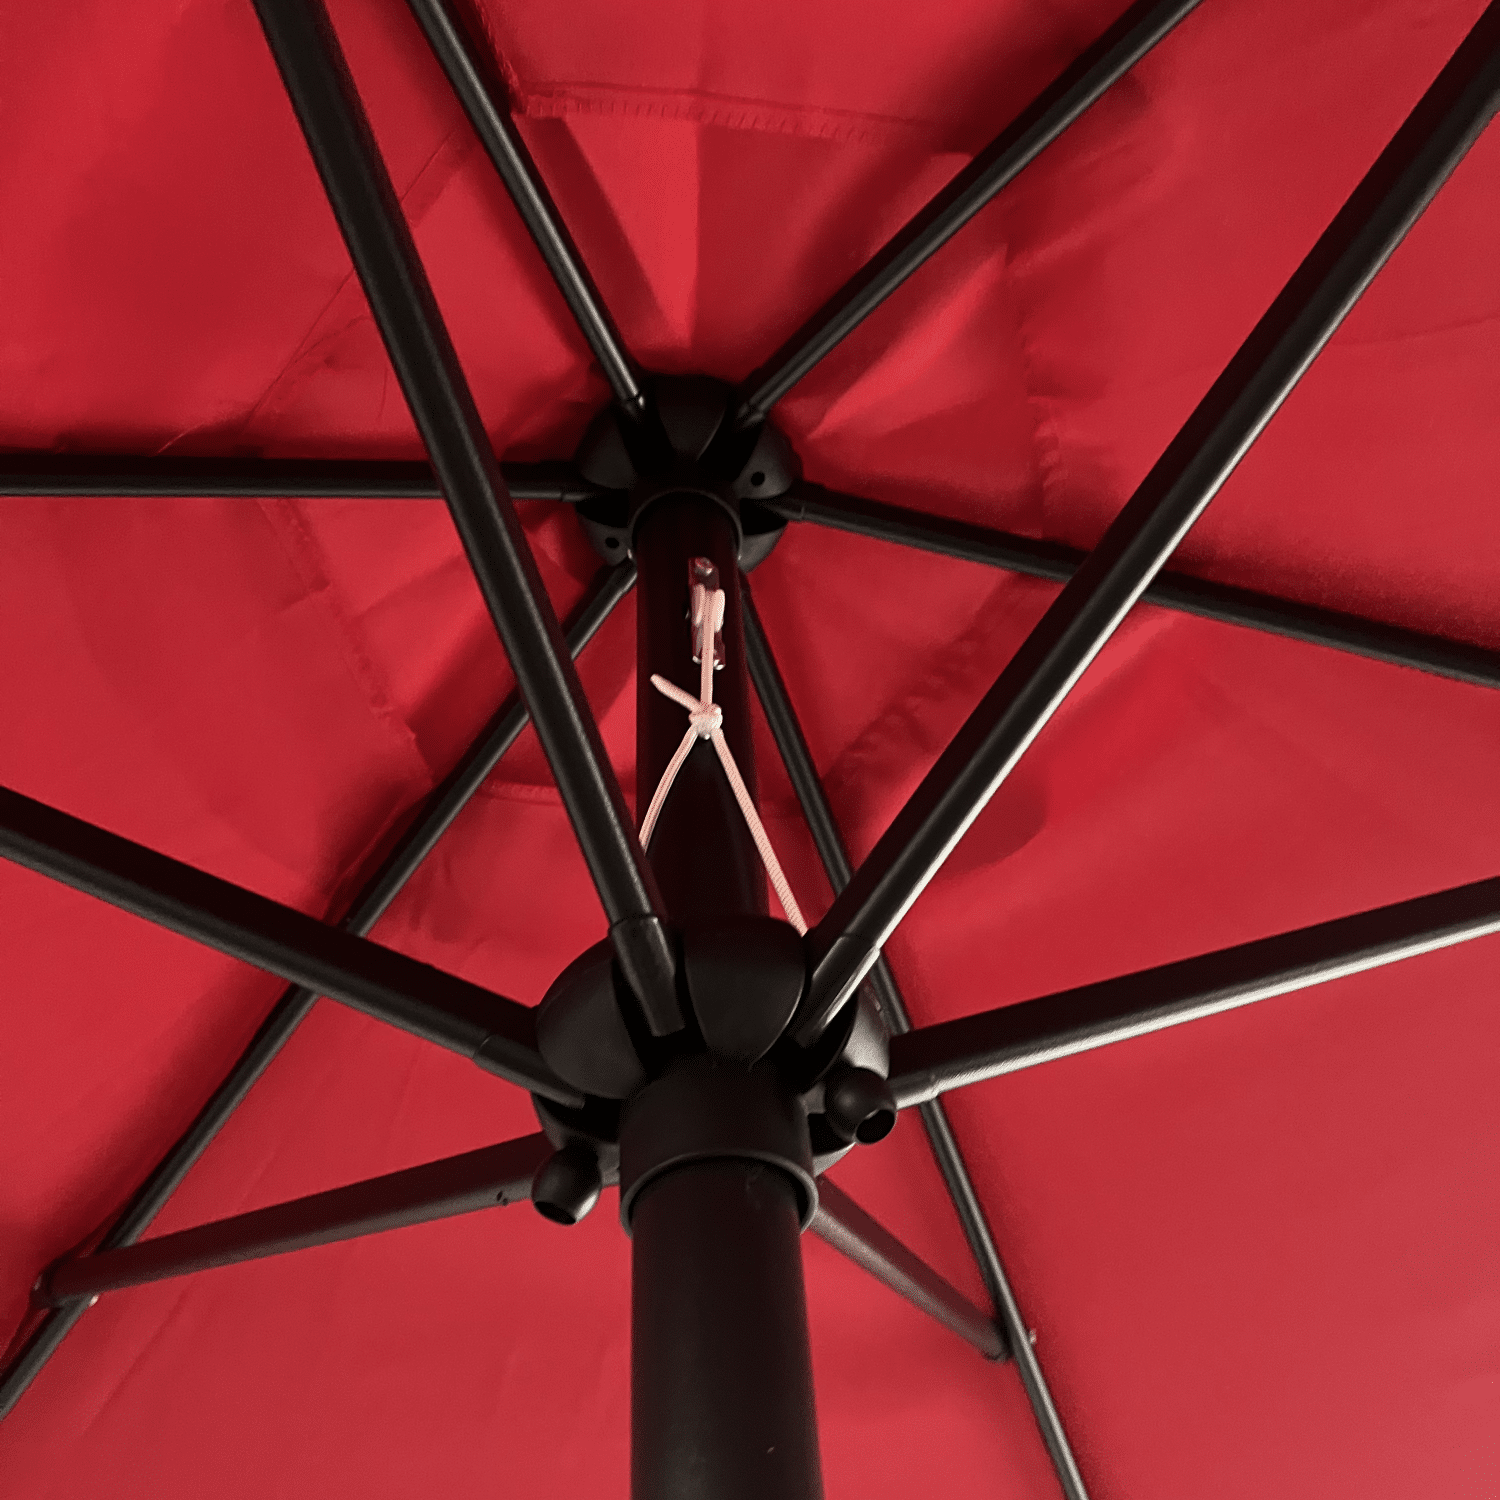 HAPUNA rechte ronde parasol 2,70m diameter rood